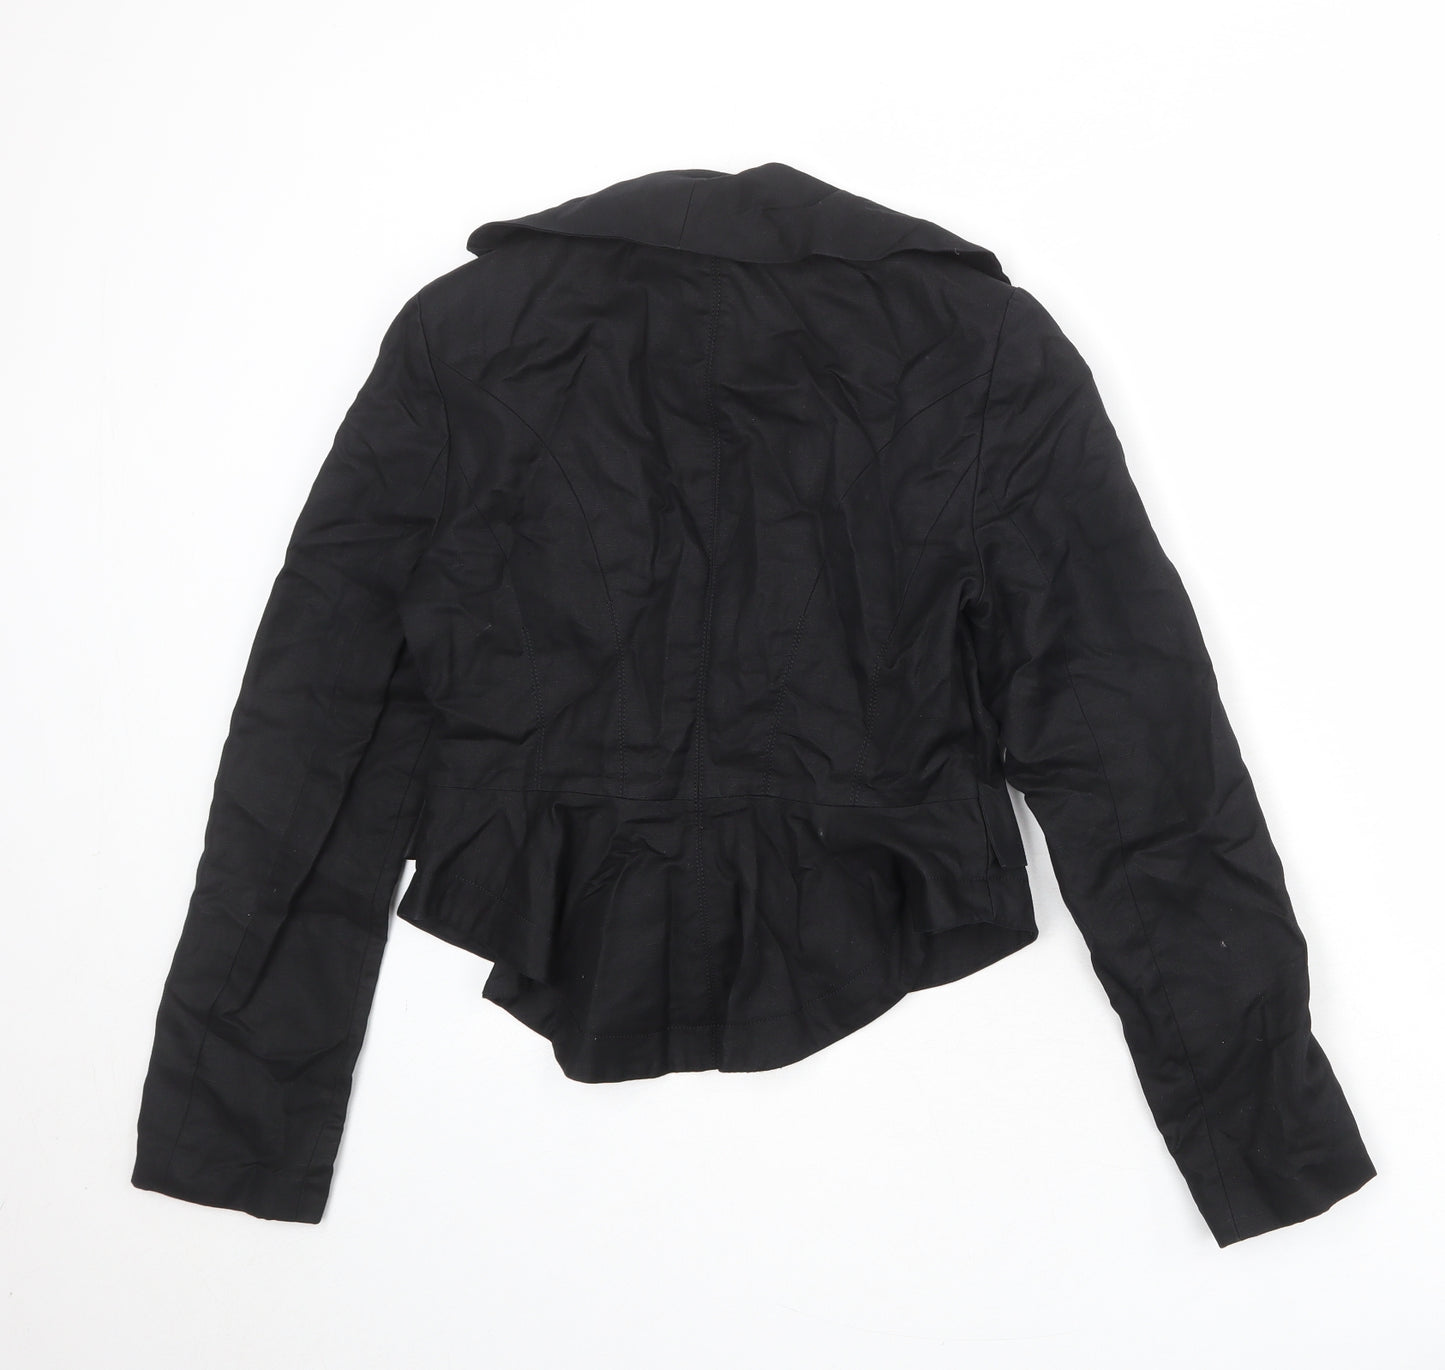 NEXT Womens Black Cotton Jacket Blazer Size 10